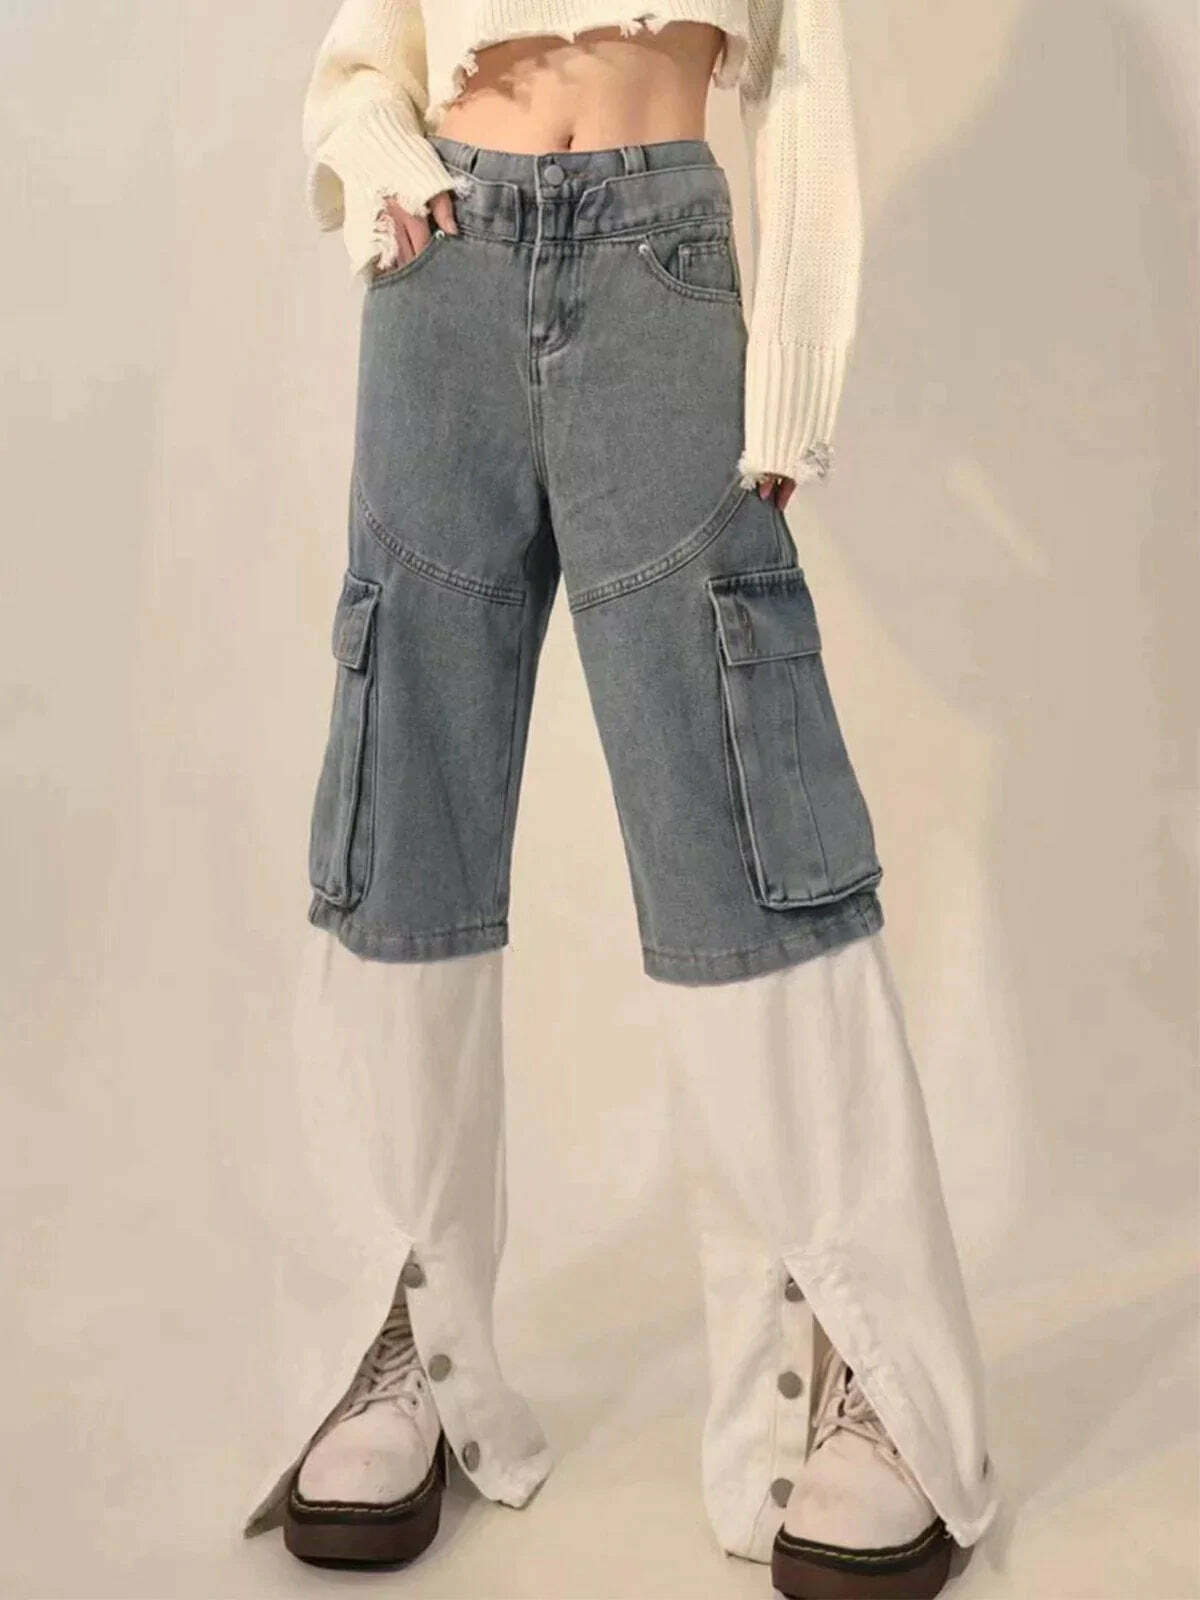 patchwork denim jeans vintage & edgy urban style 5544